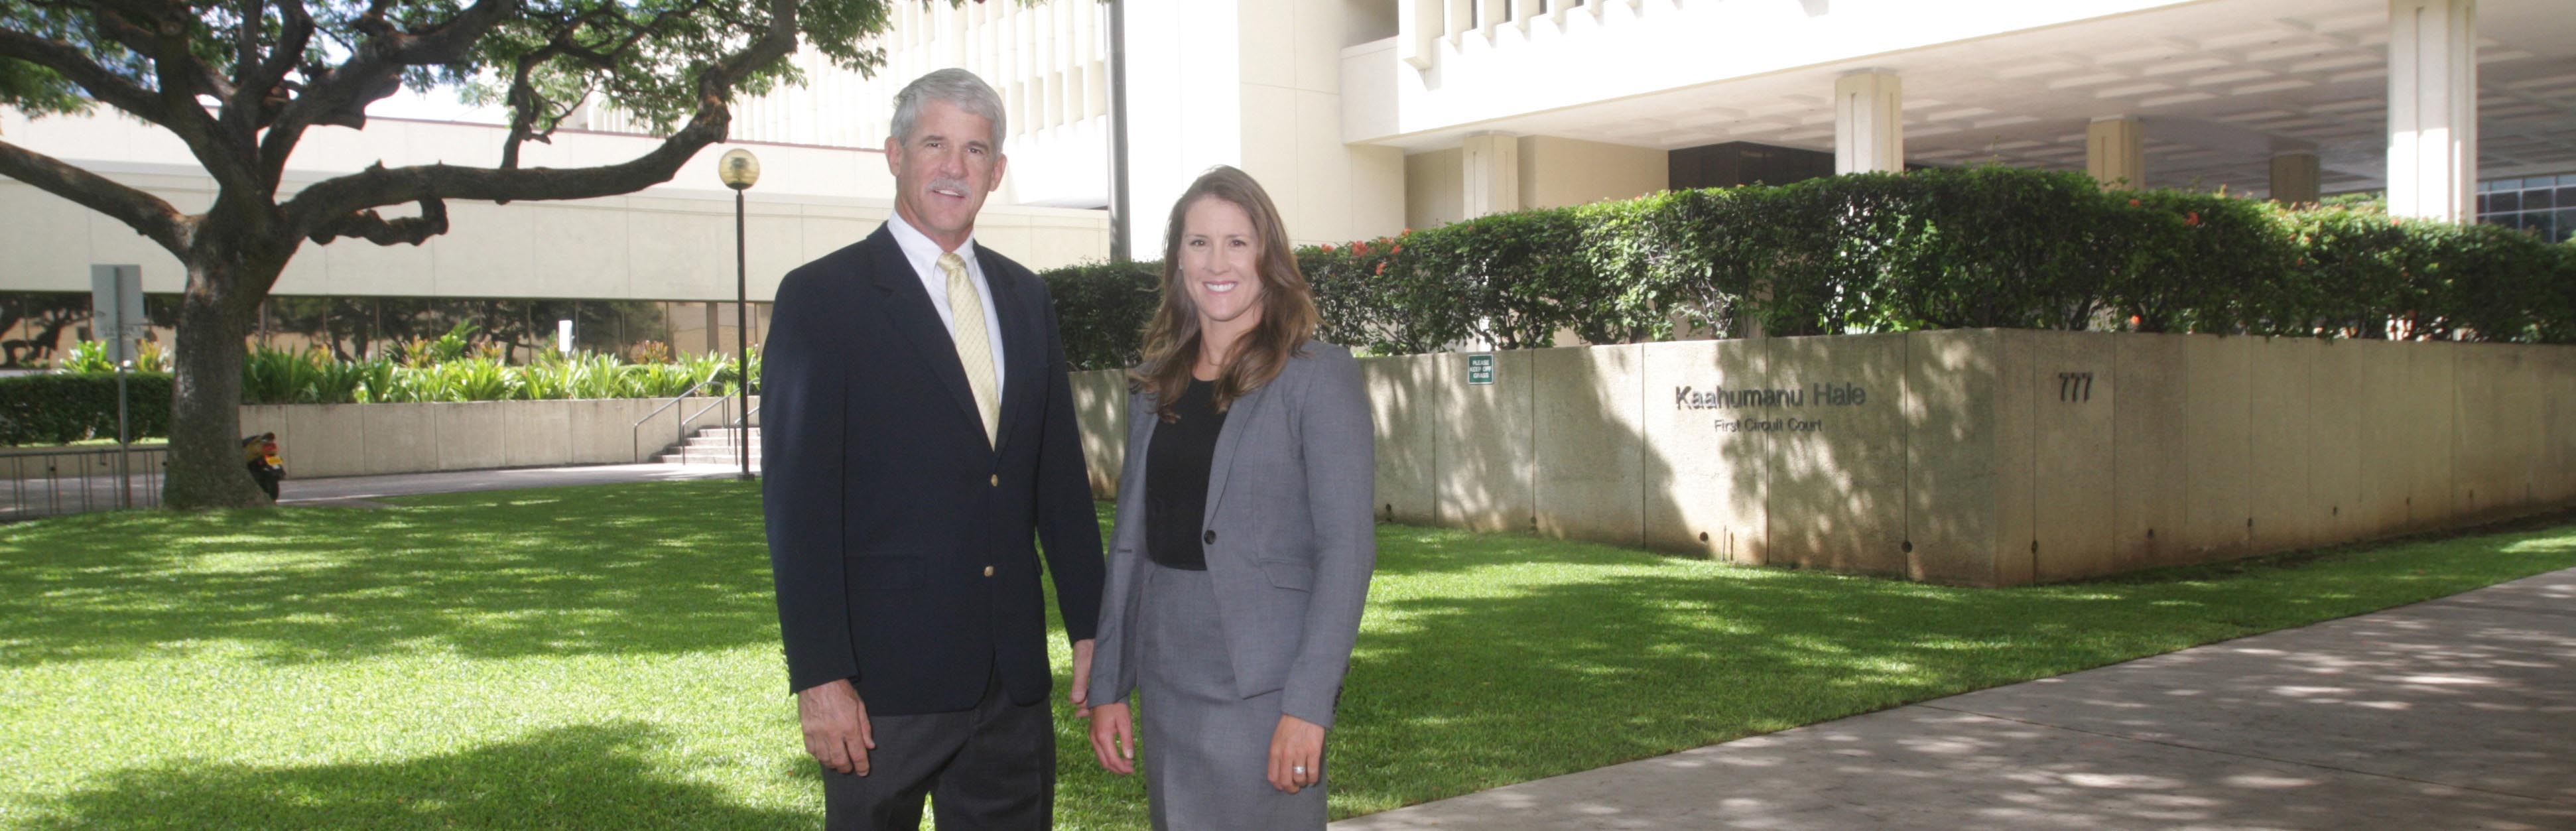 Honolulu Injury Lawyers William Lawson and Amy Woodward